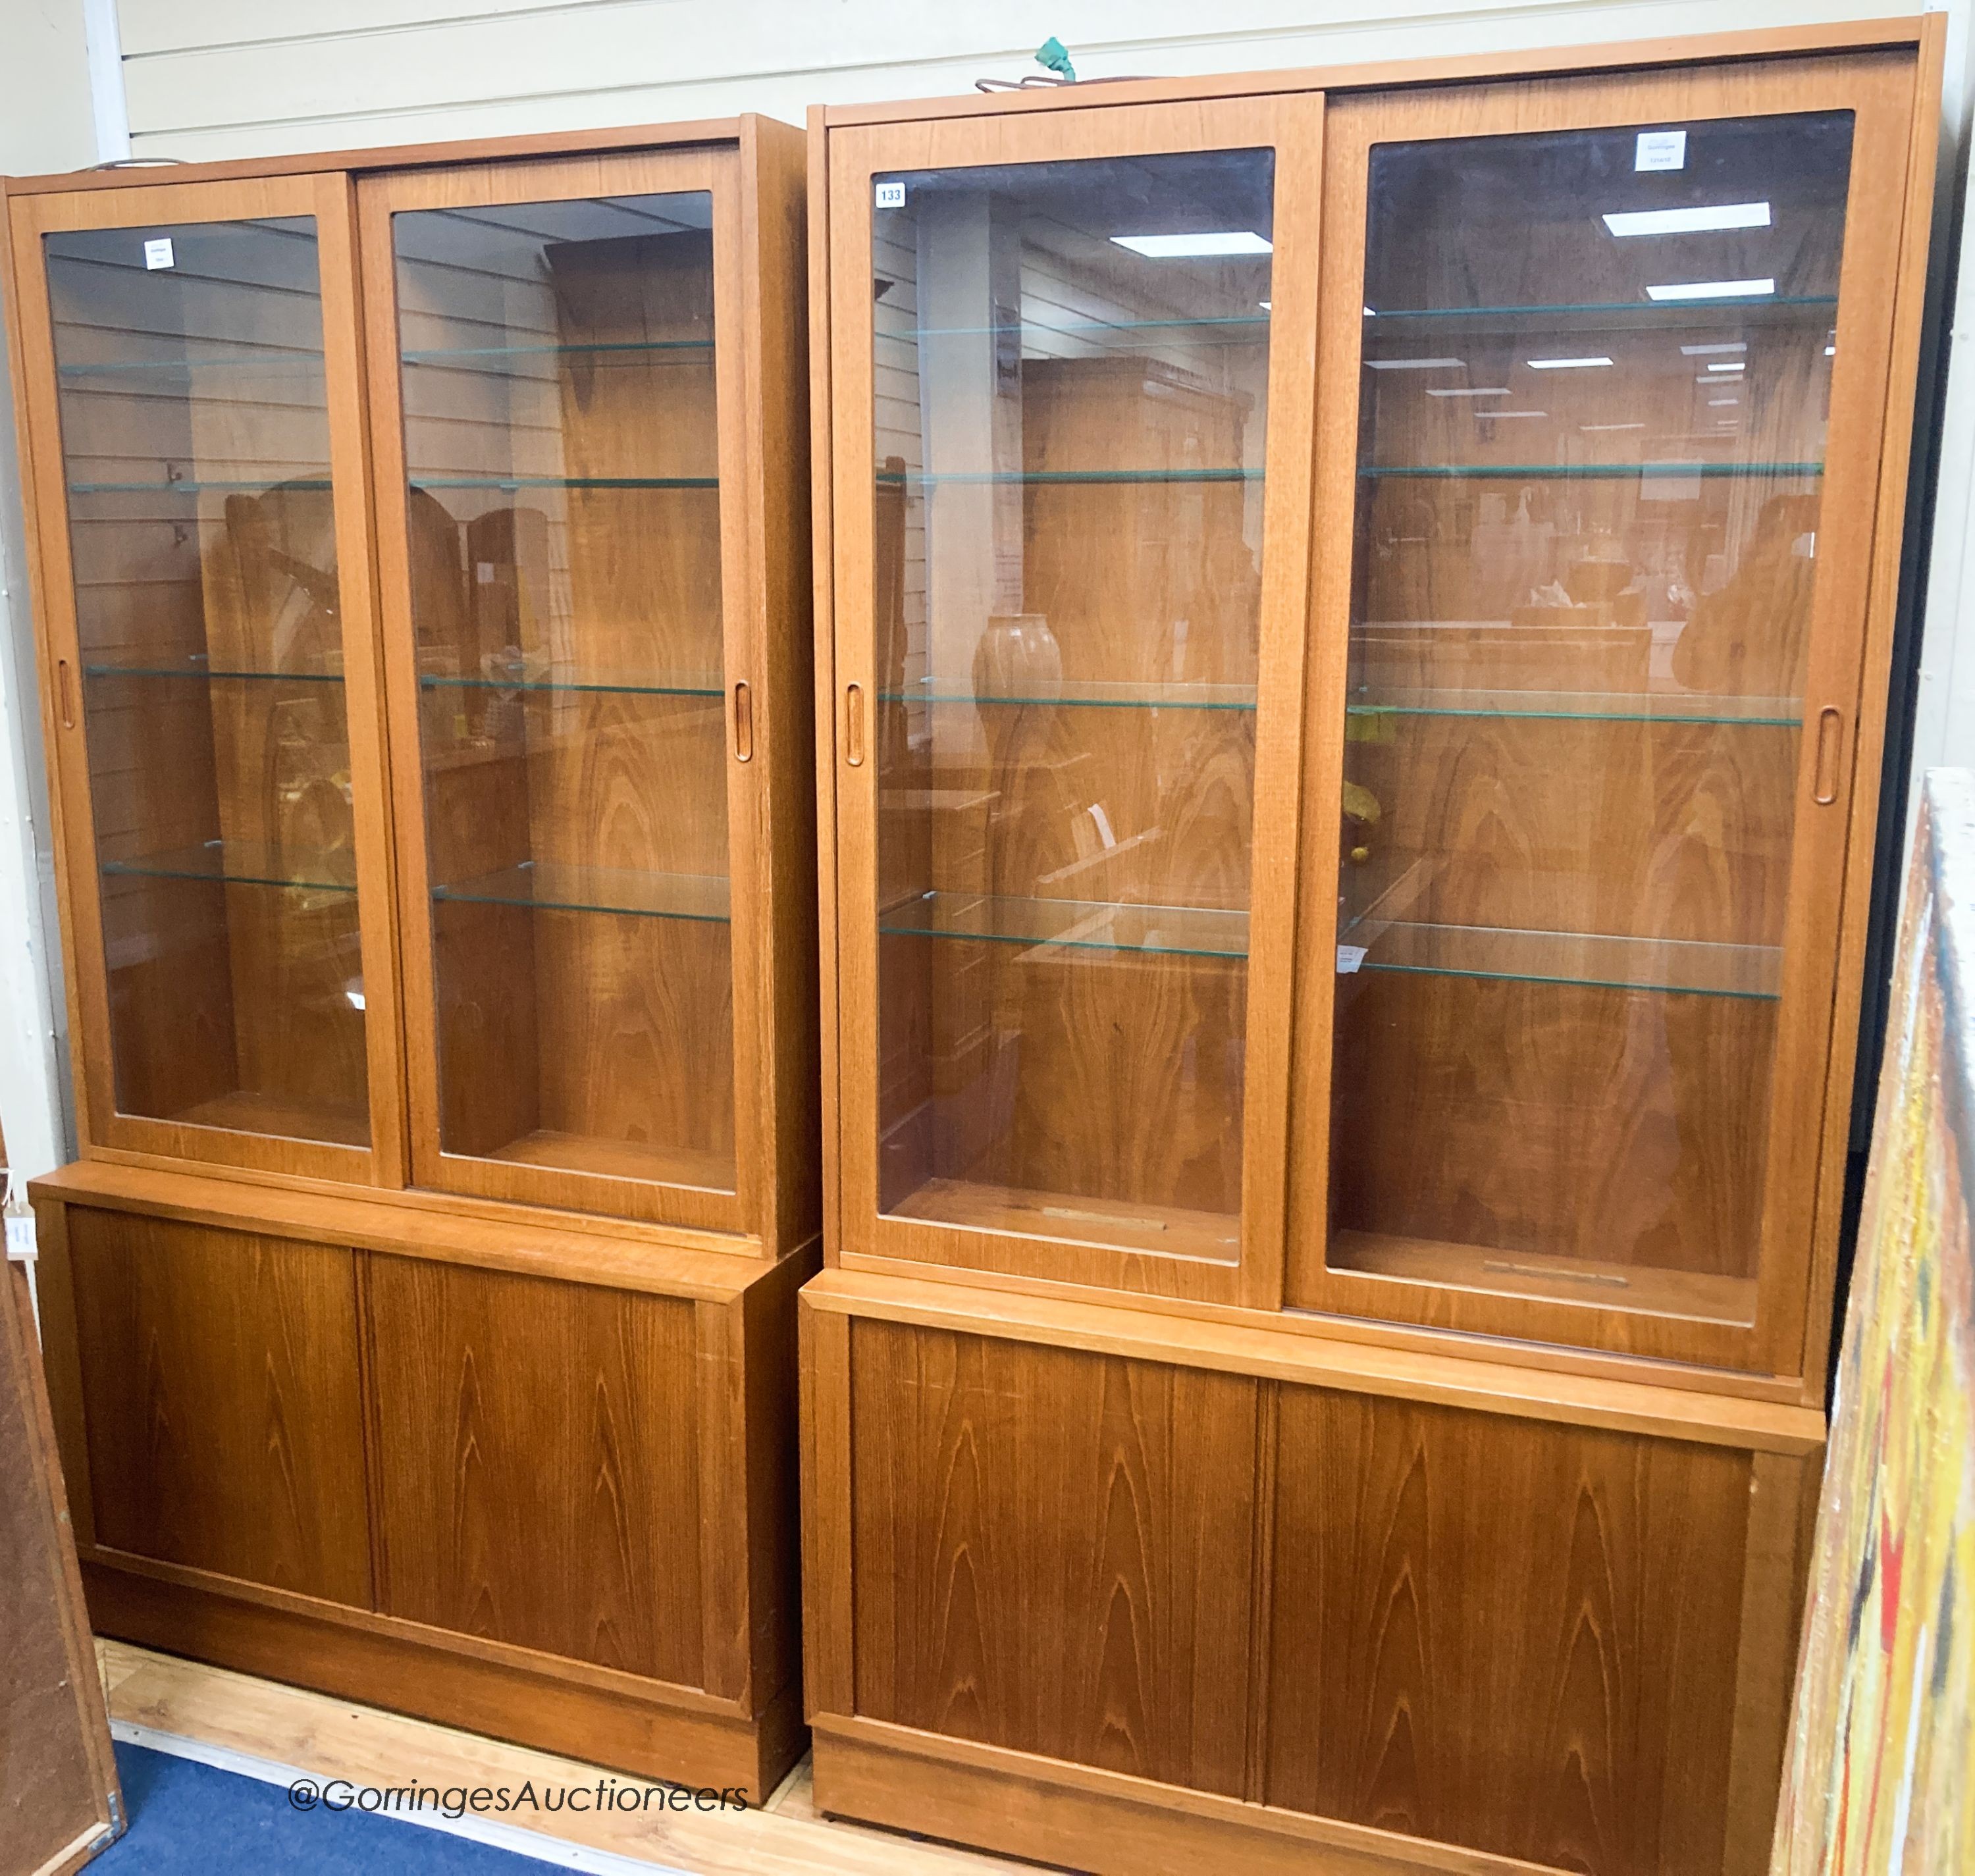 A pair of Harrods teak display cabinets, width 108cm, depth 43cm, height 196cm